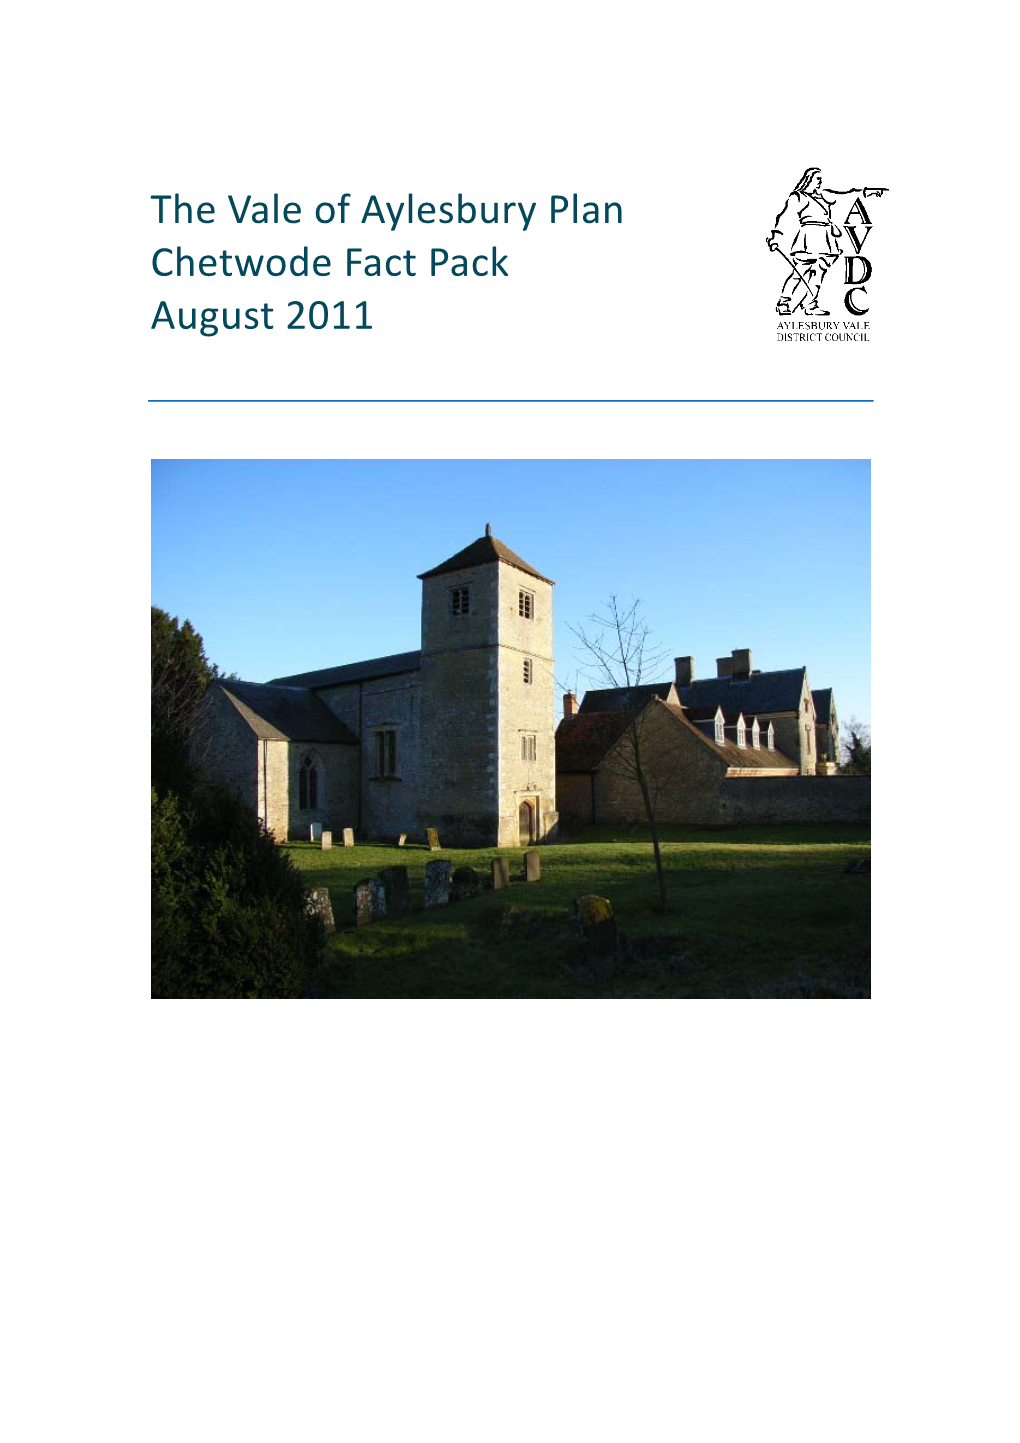 Chetwode Fact Pack August 2011